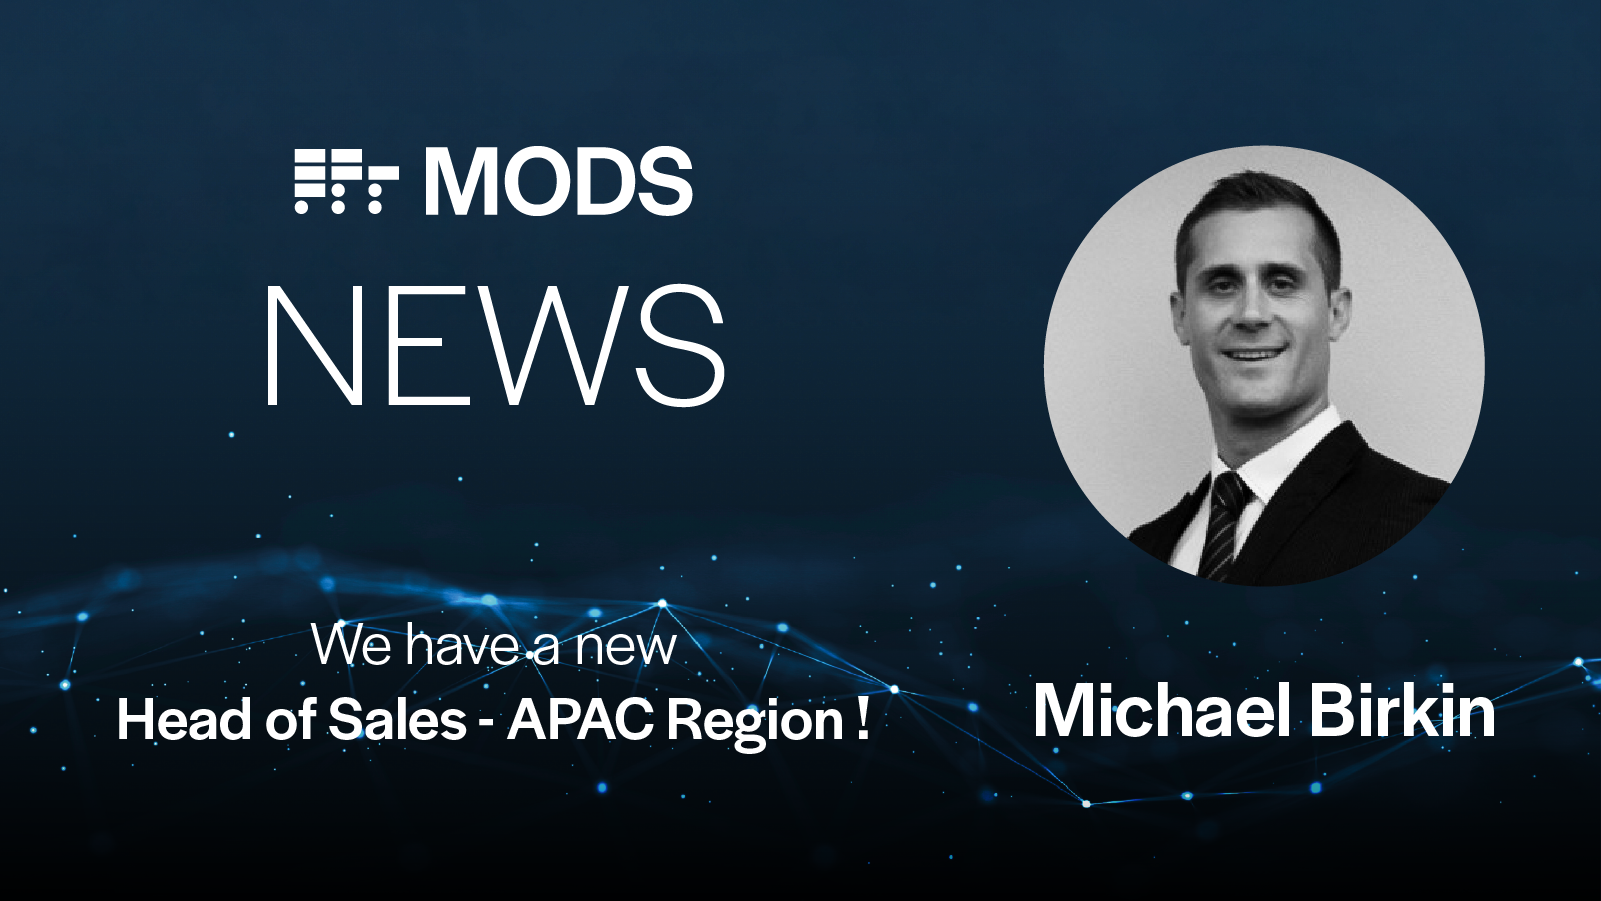 Michael Birkin Appointed as Head of Sales - APAC Region at MODS